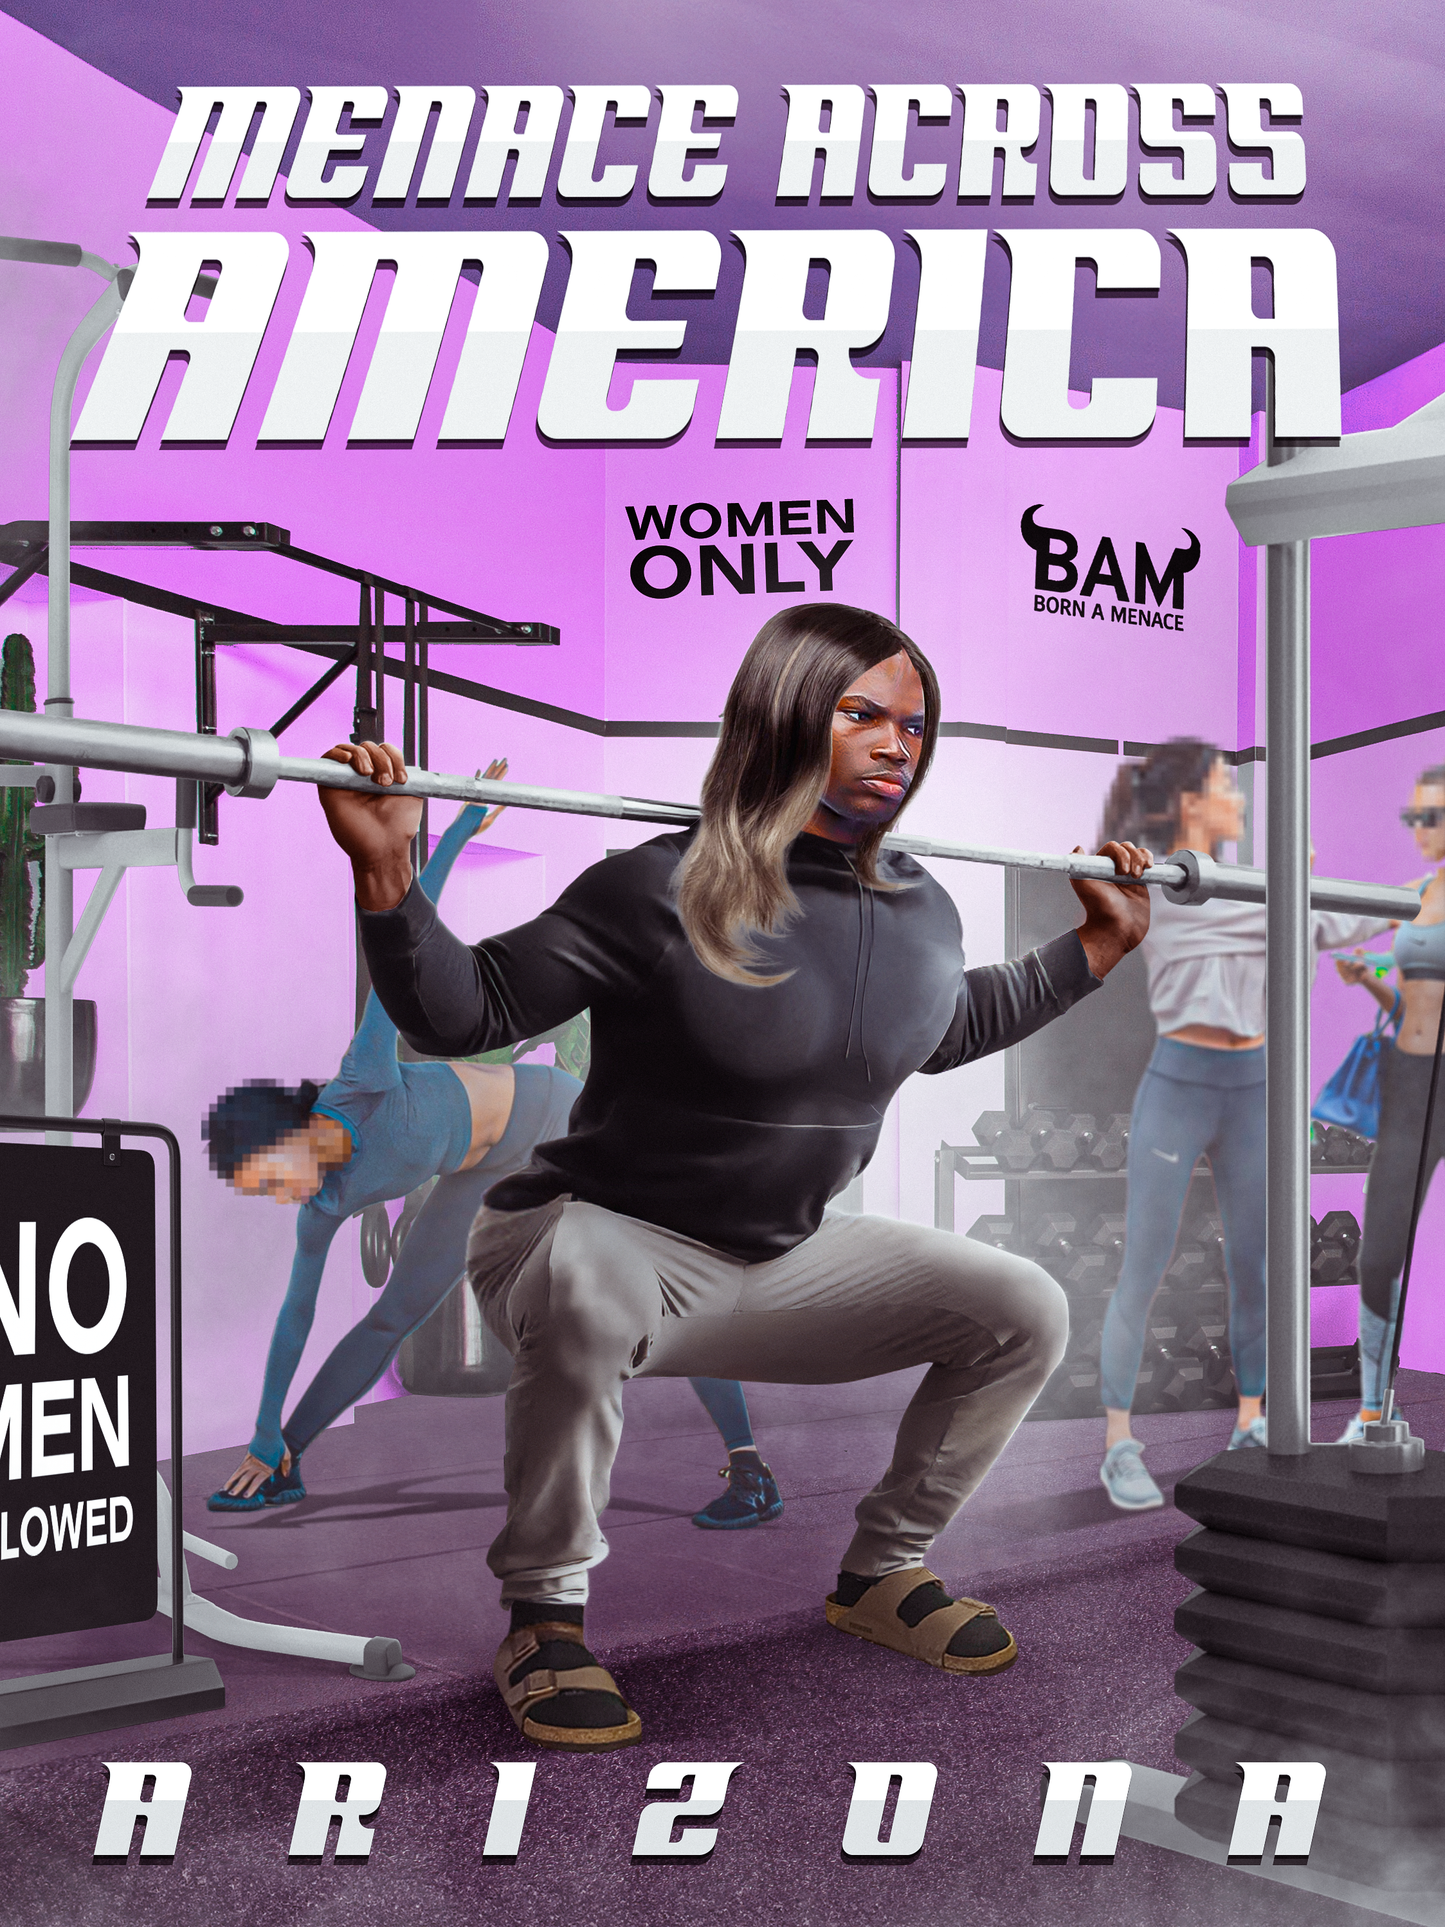 Menace Across America Arizona Poster